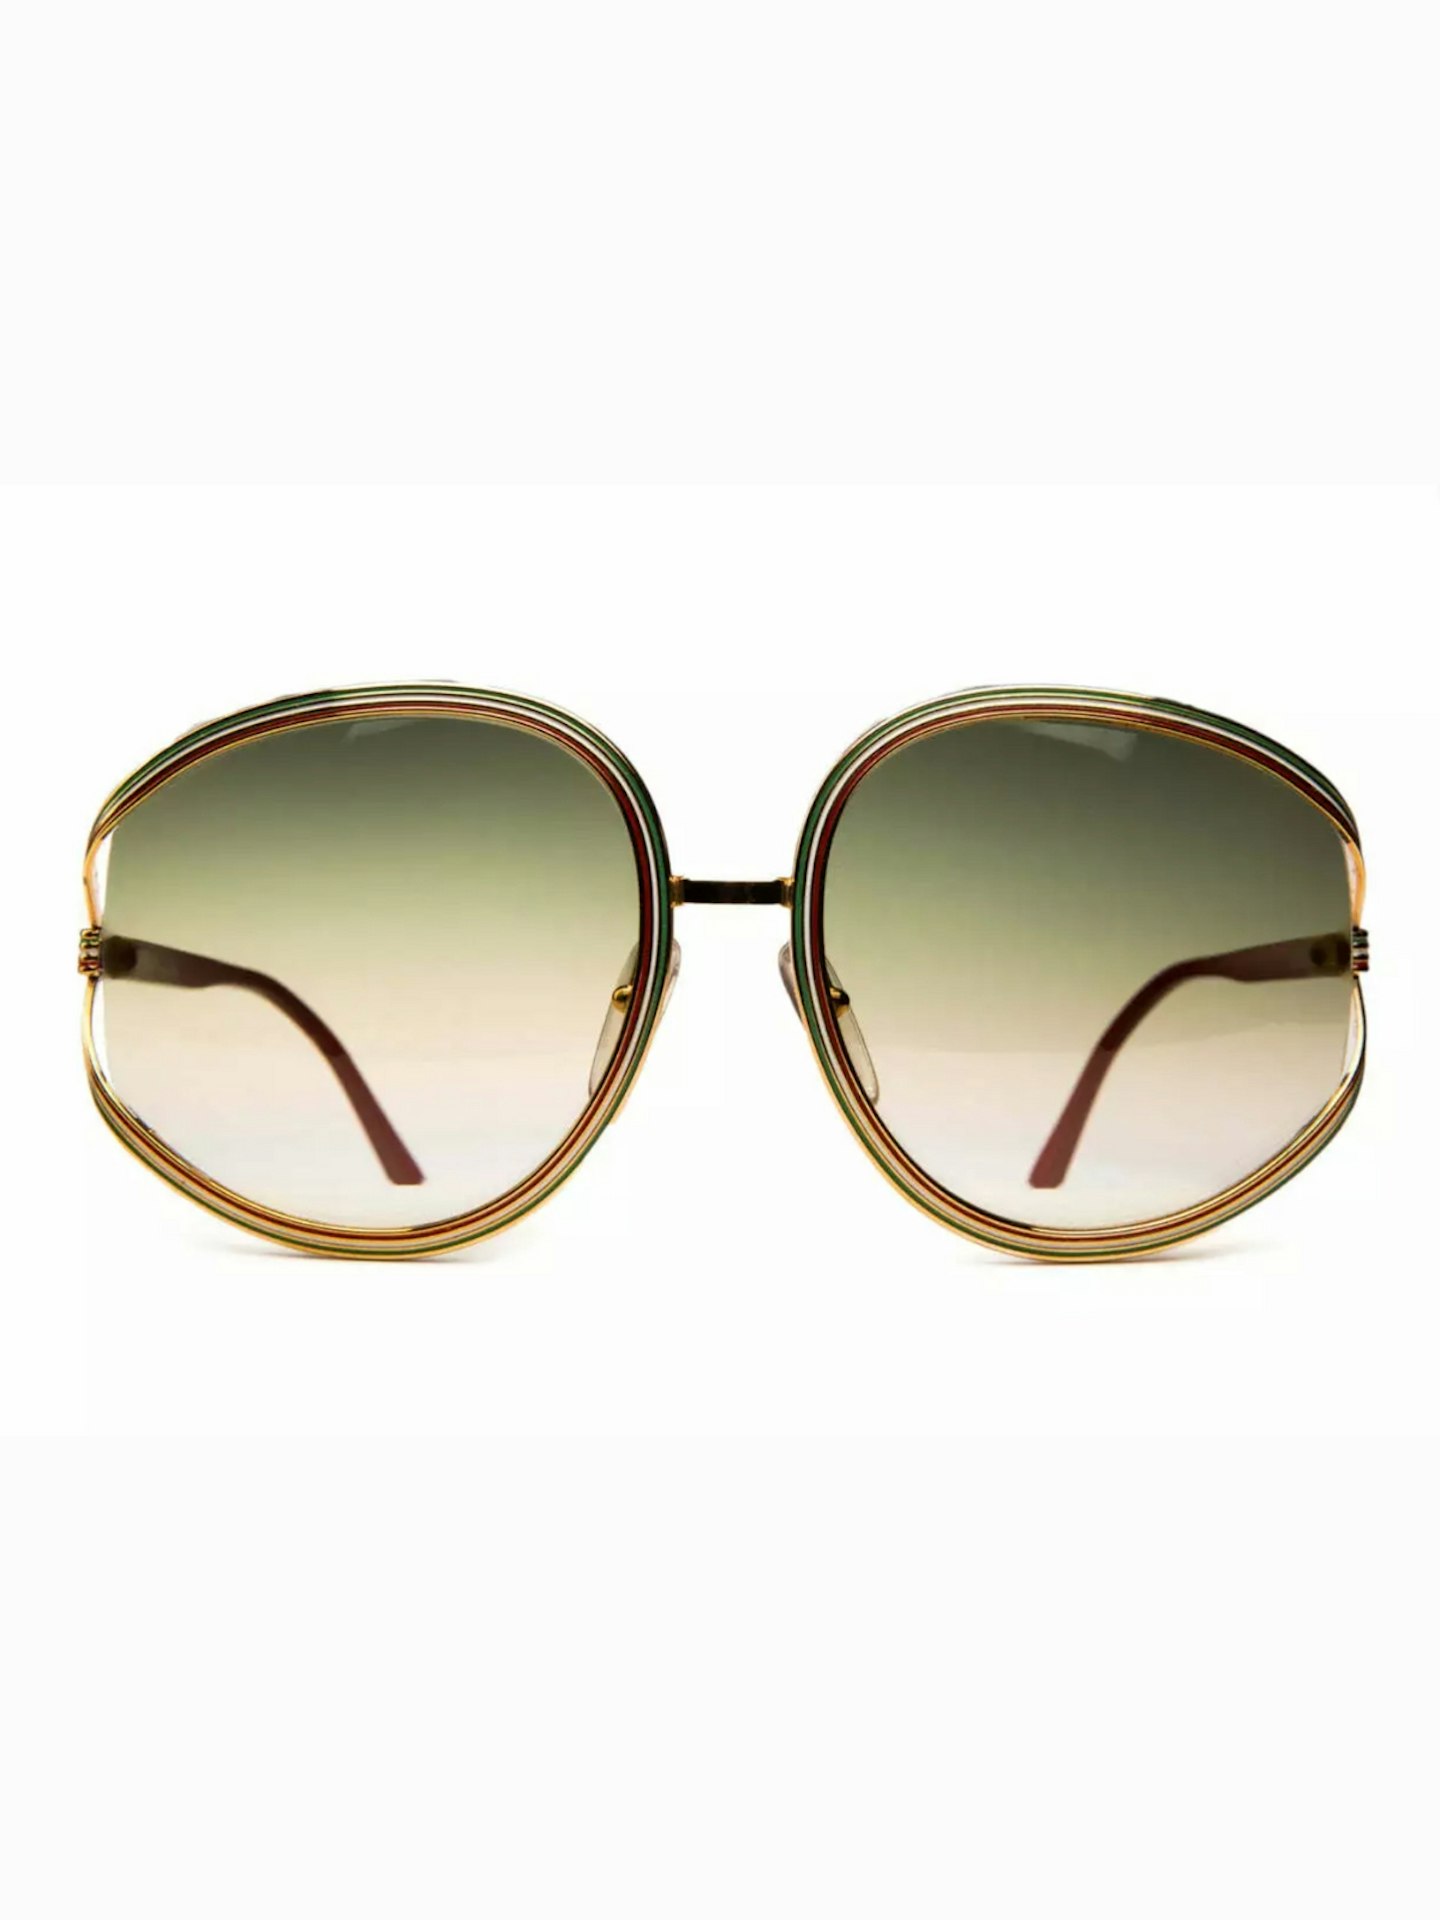 Christian Dior 2475 43 Gold Frame Green Gradient Vintage Sunglasses 